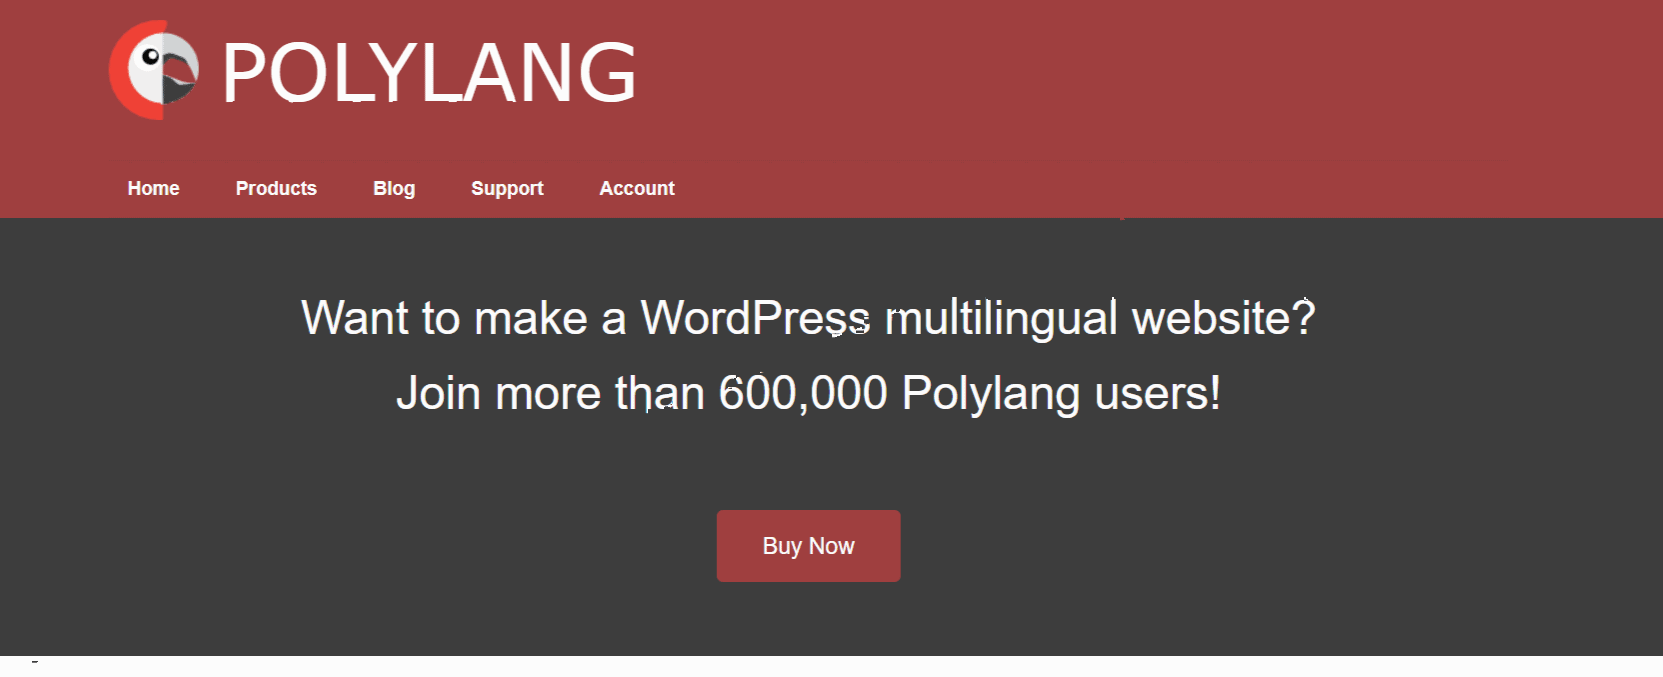 Polylang – Mak